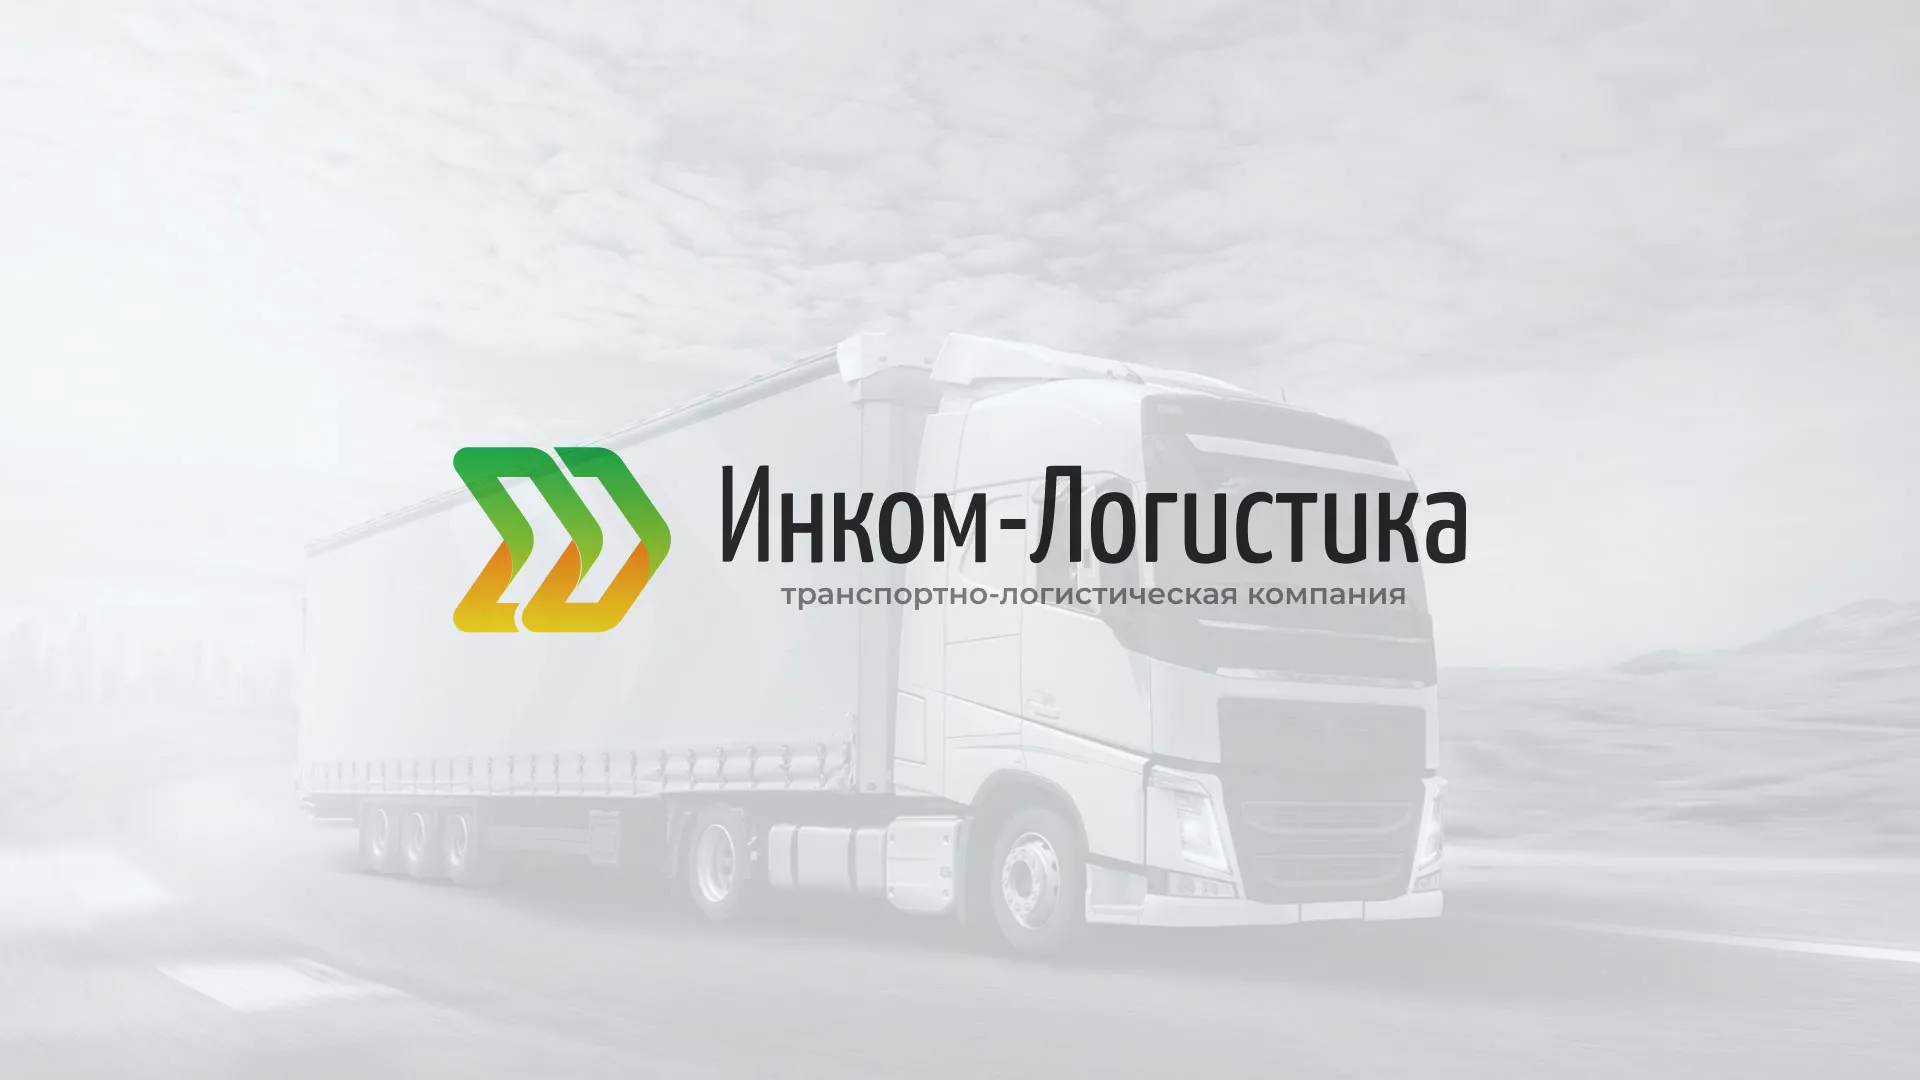 Разработка логотипа и сайта компании «Инком-Логистика» в Славске